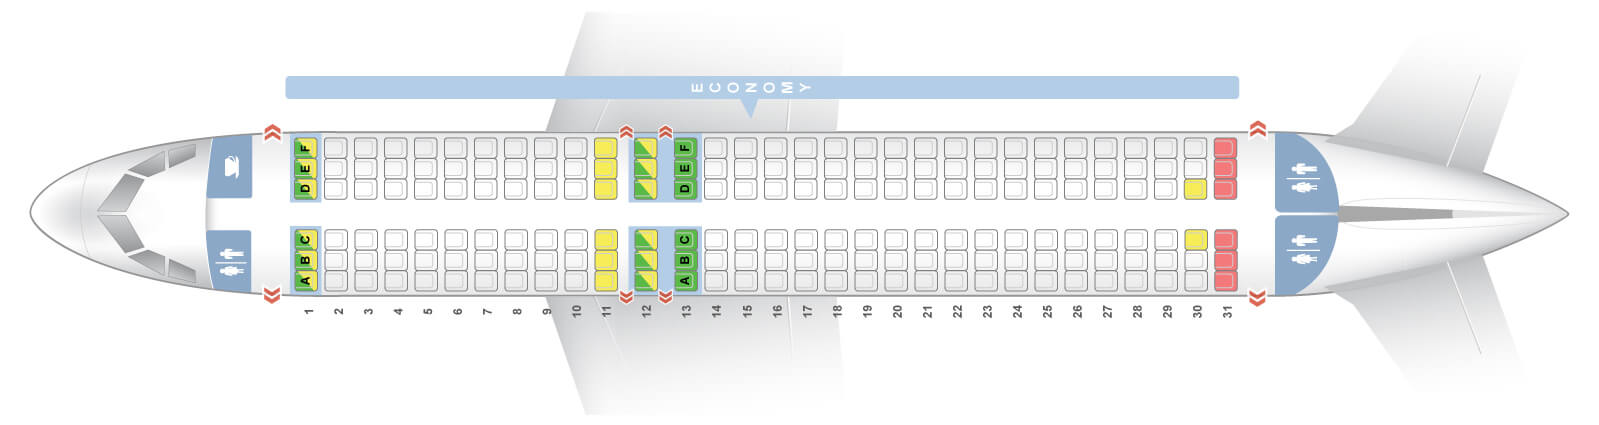 A320 easyJet seat map